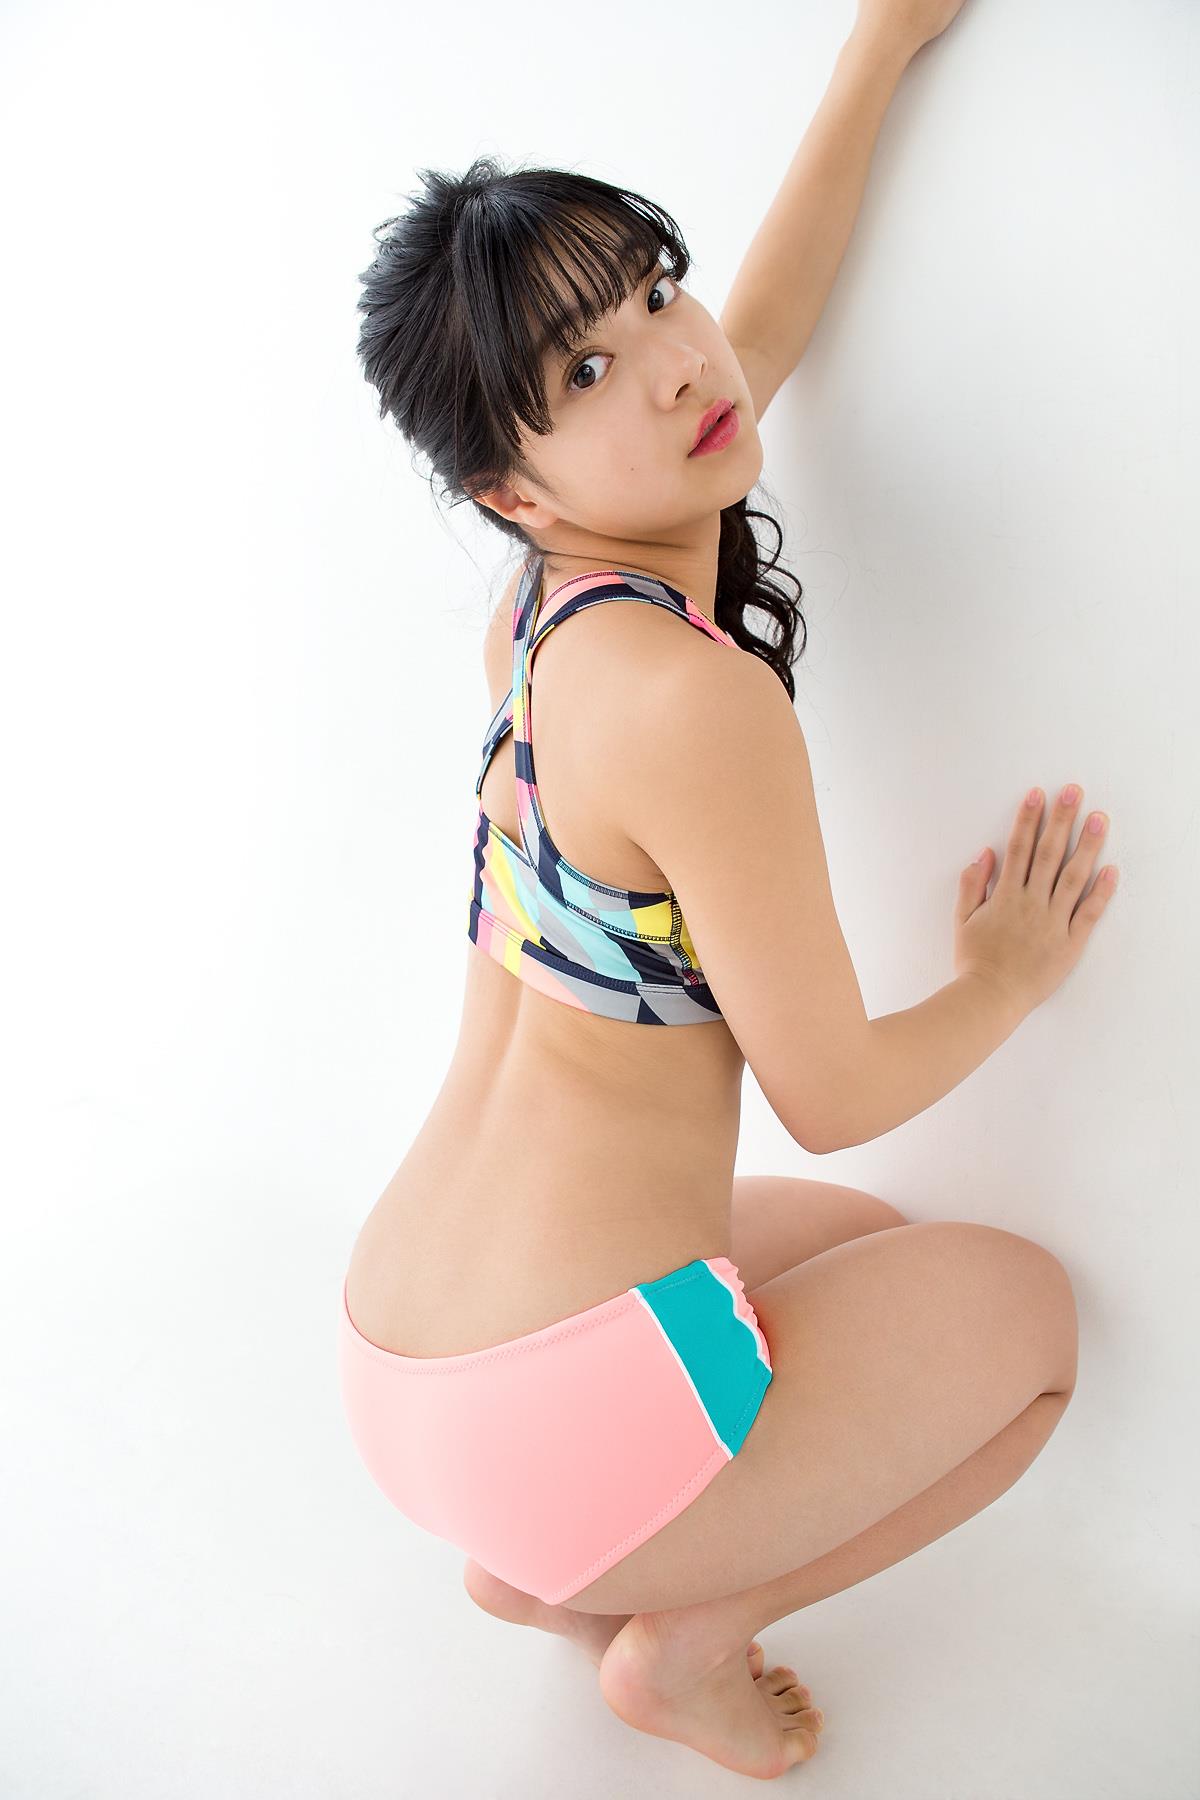 Minisuka.tv Saria Natsume 夏目咲莉愛 Premium Gallery 04 - 44.jpg